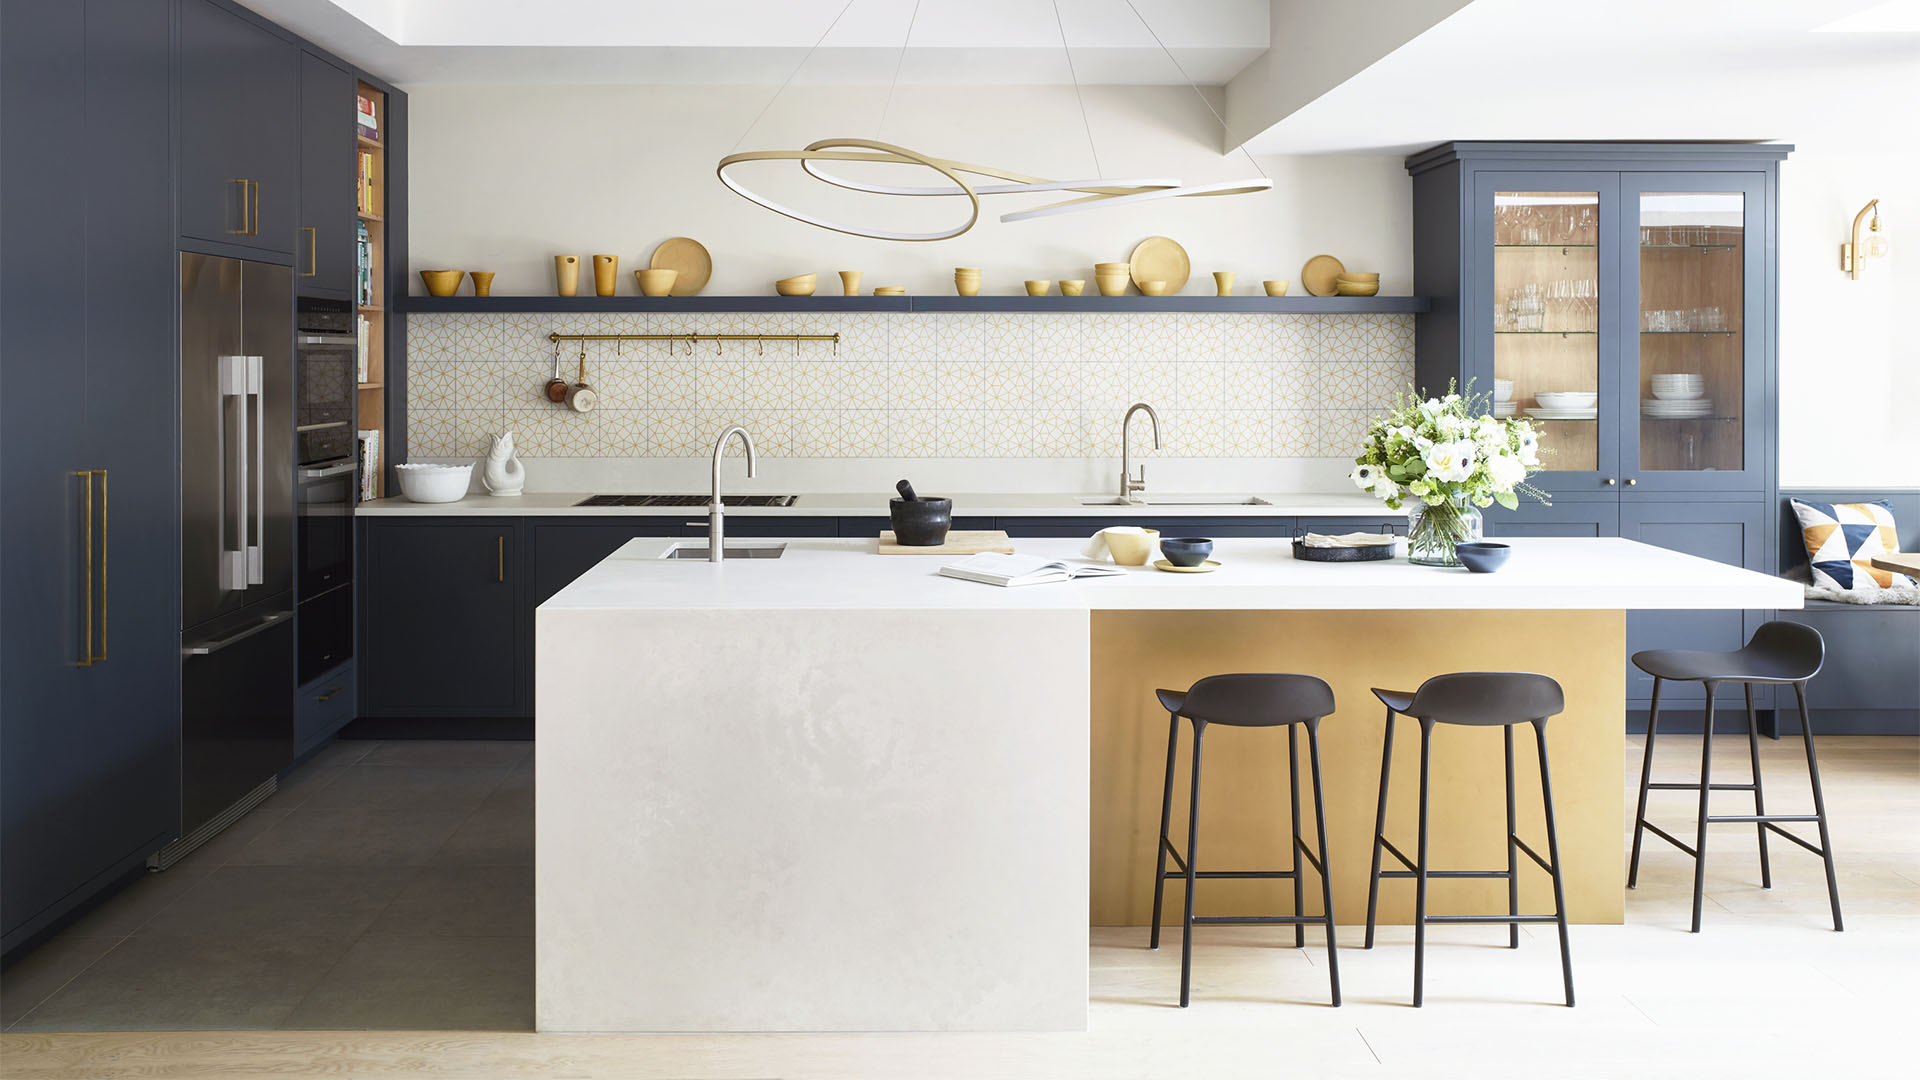 Case Study: A striking contemporary kitchen